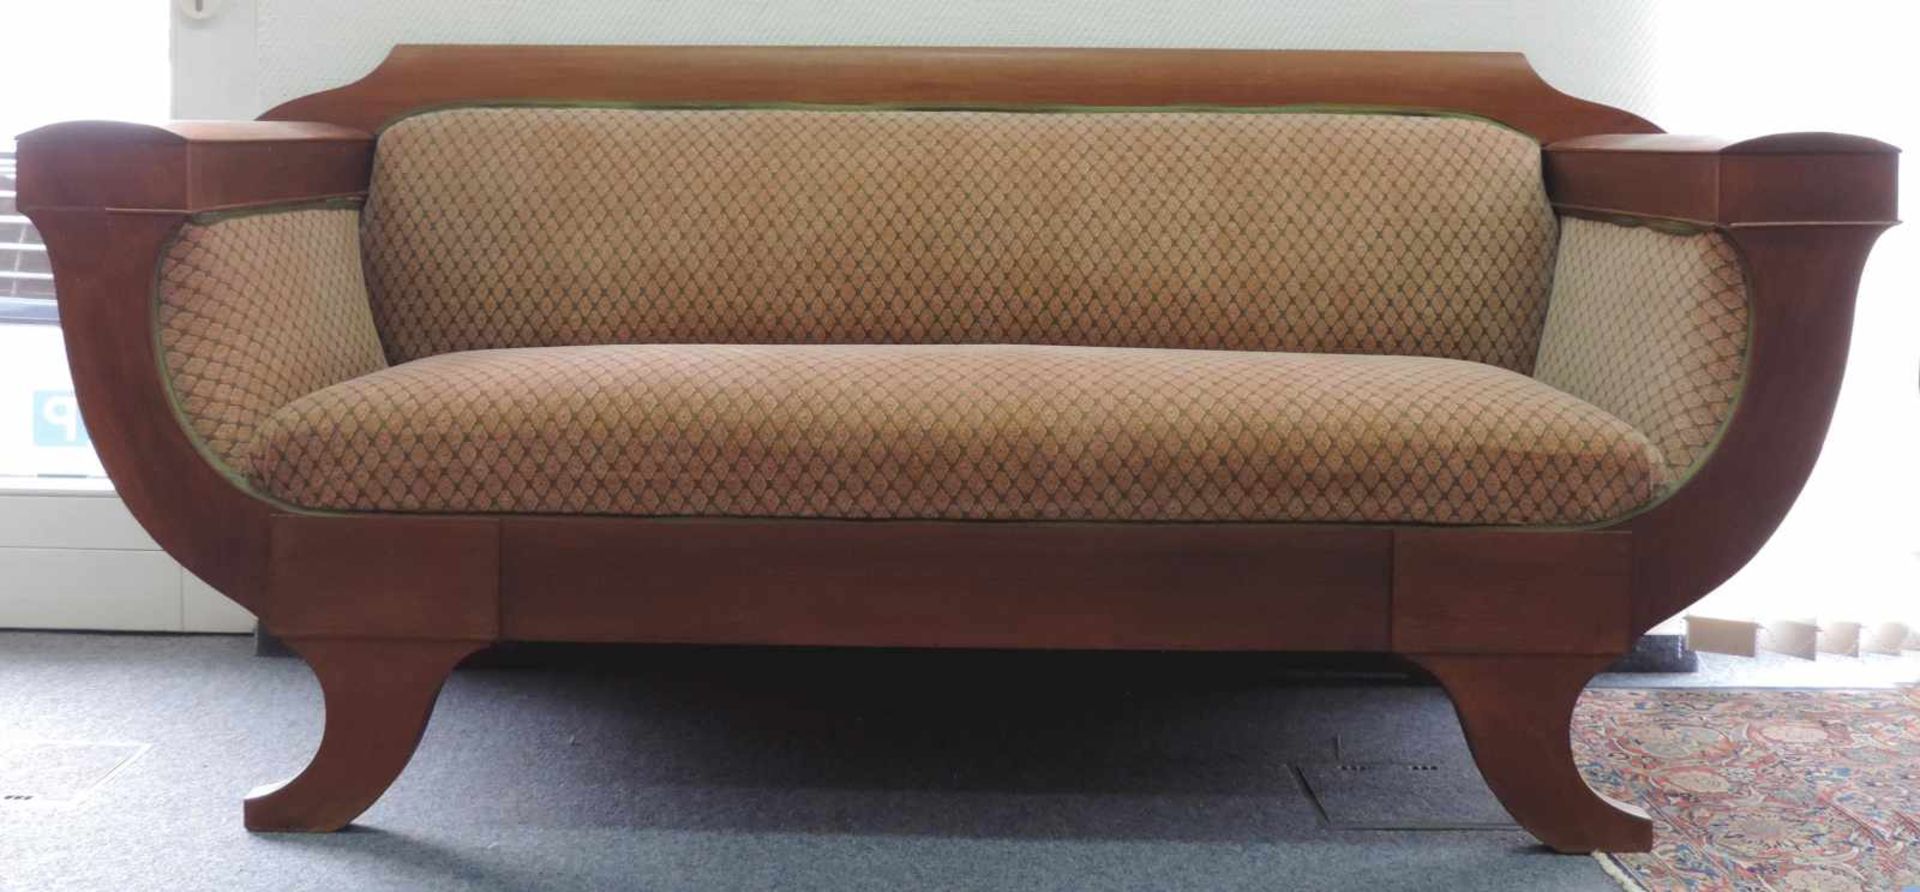 Sofa, wohl 19. Jahrhundert.200 cm lang x 73 cm Tiefe gesamt. Sitztiefe 55 cm.Sofa, probably 19th